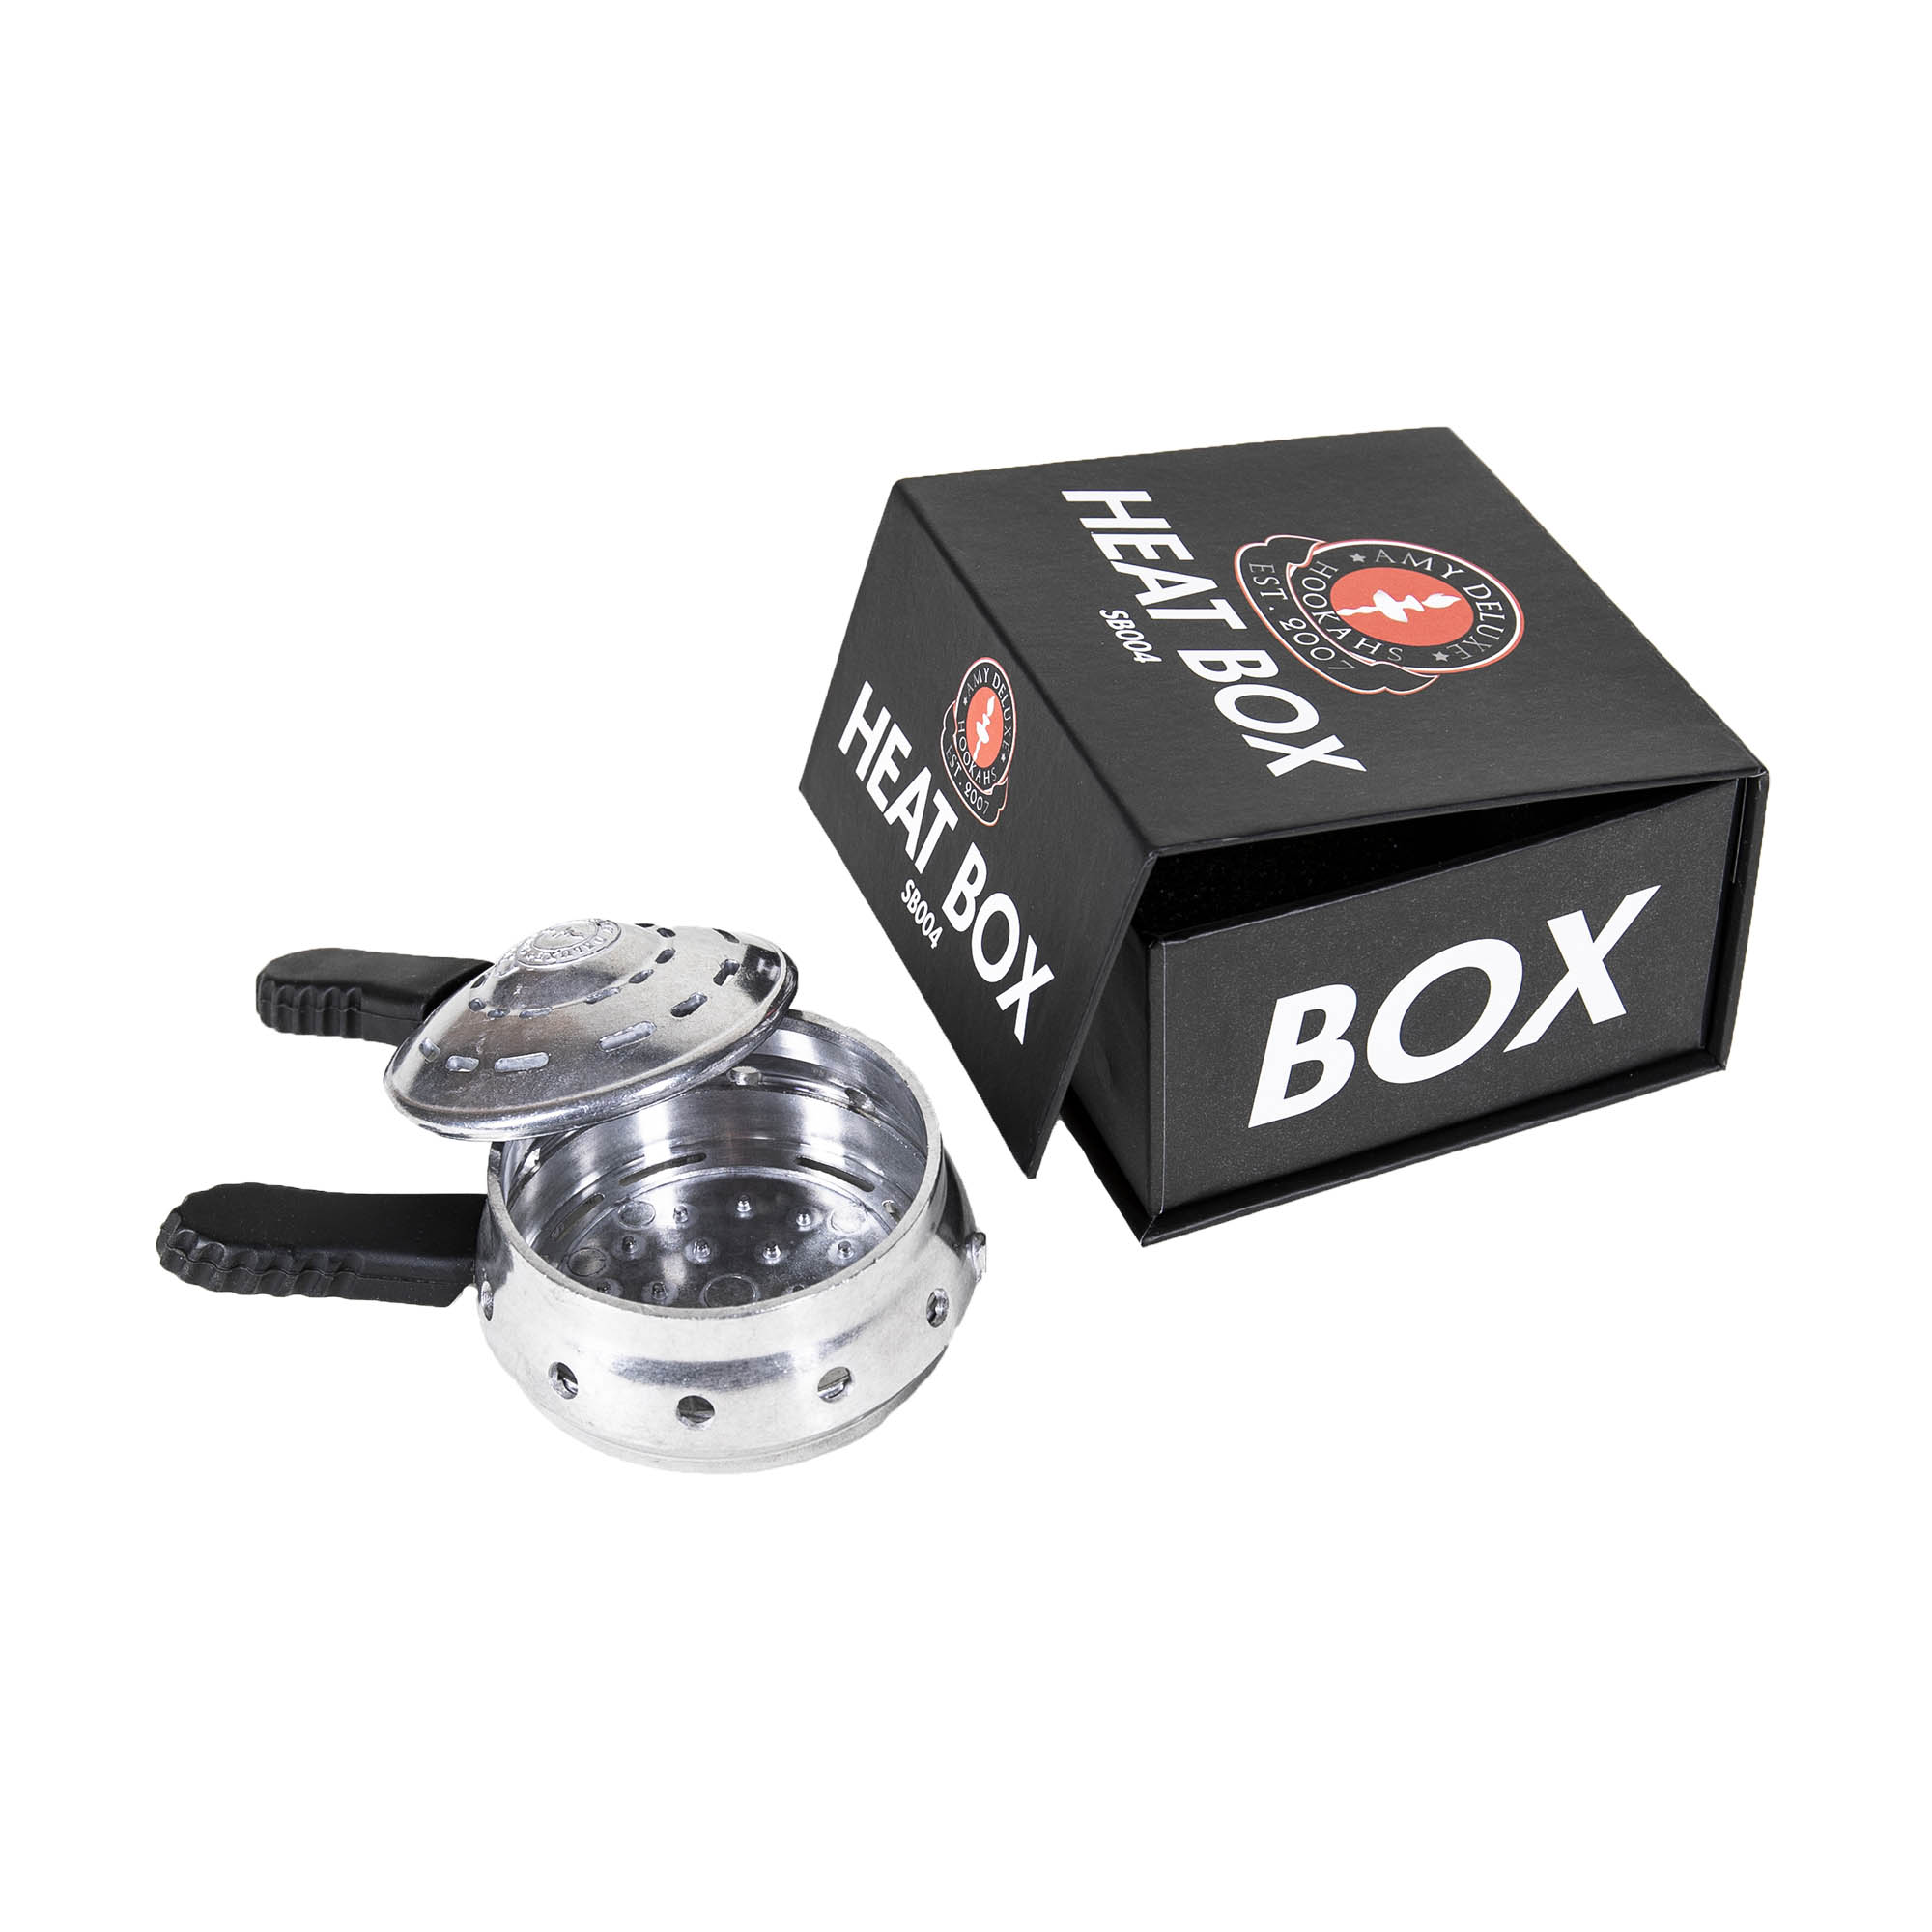 Heat Box SB004